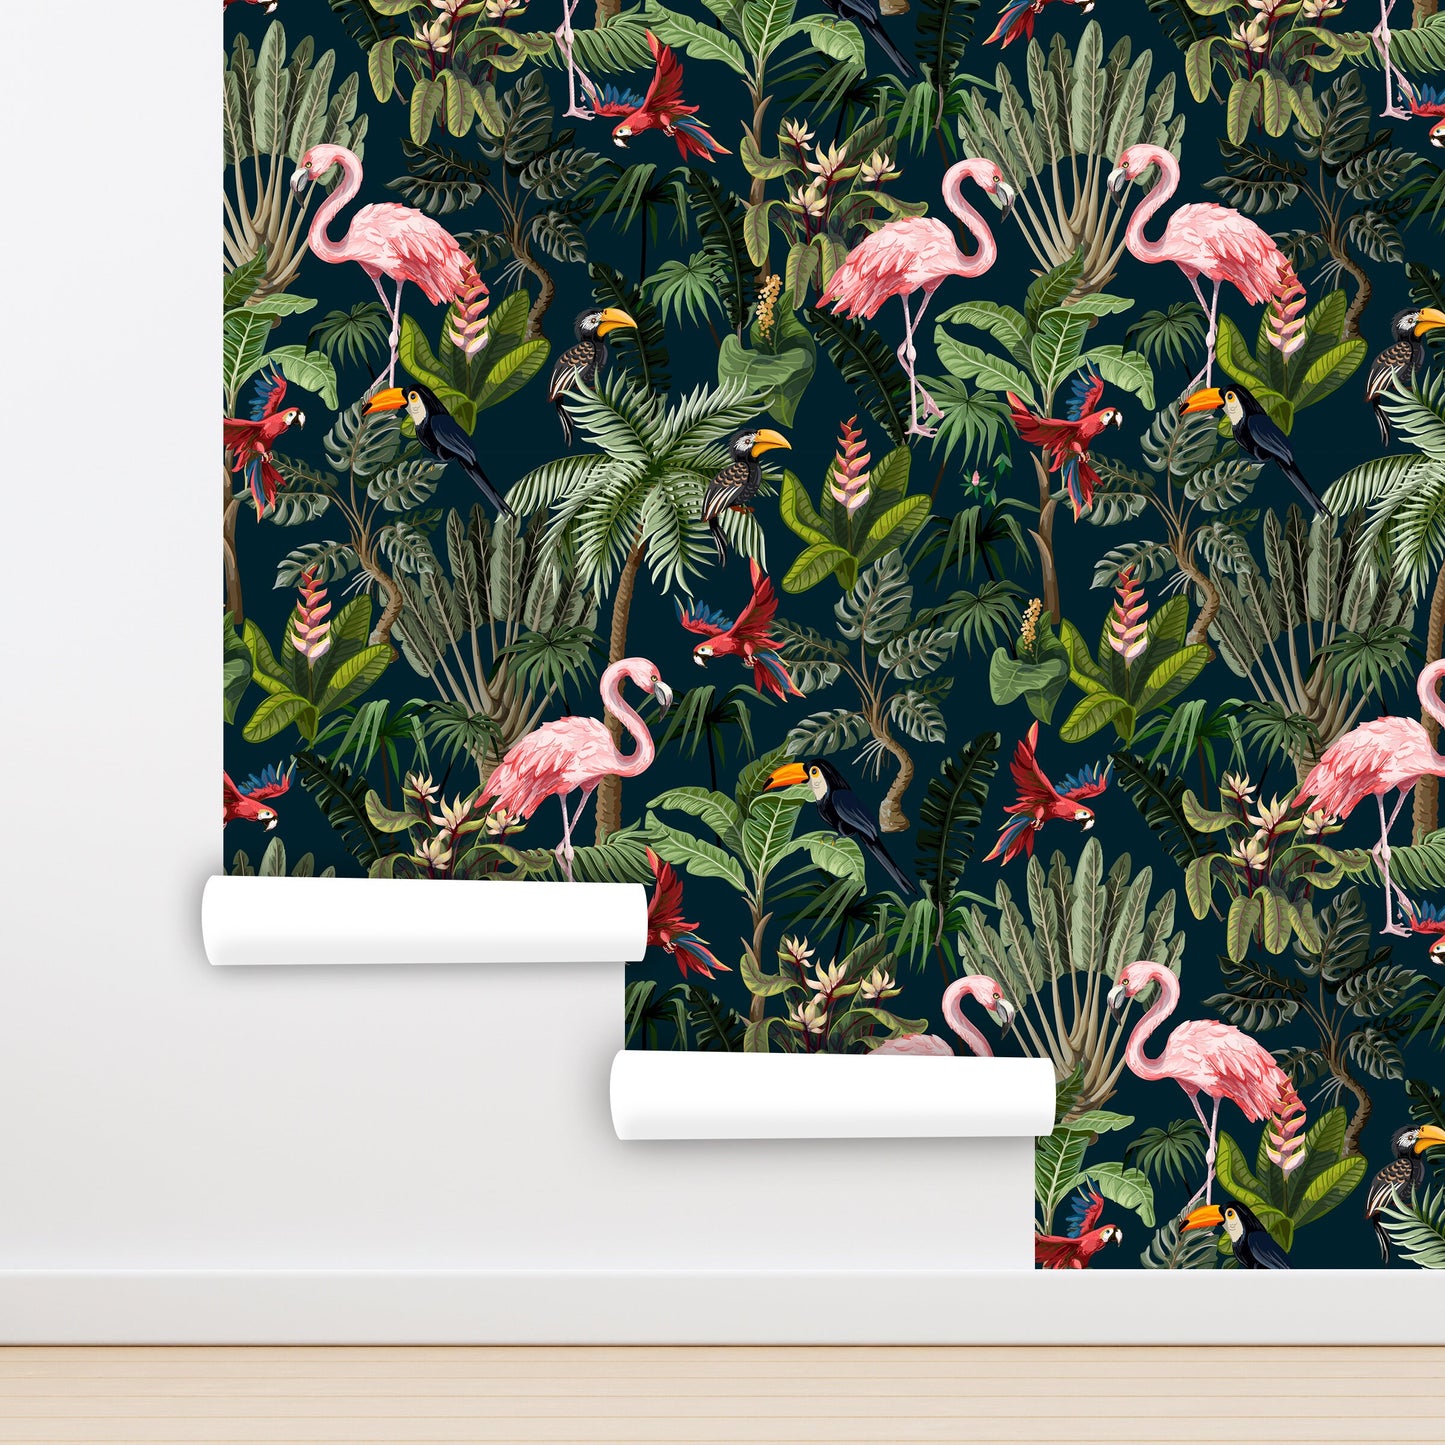 Flamingo Wallpaper Peel and Stick, Parrot Wallpaper, Palm Wallpaper, Tropical Wallpaper, Removable Wall Paper